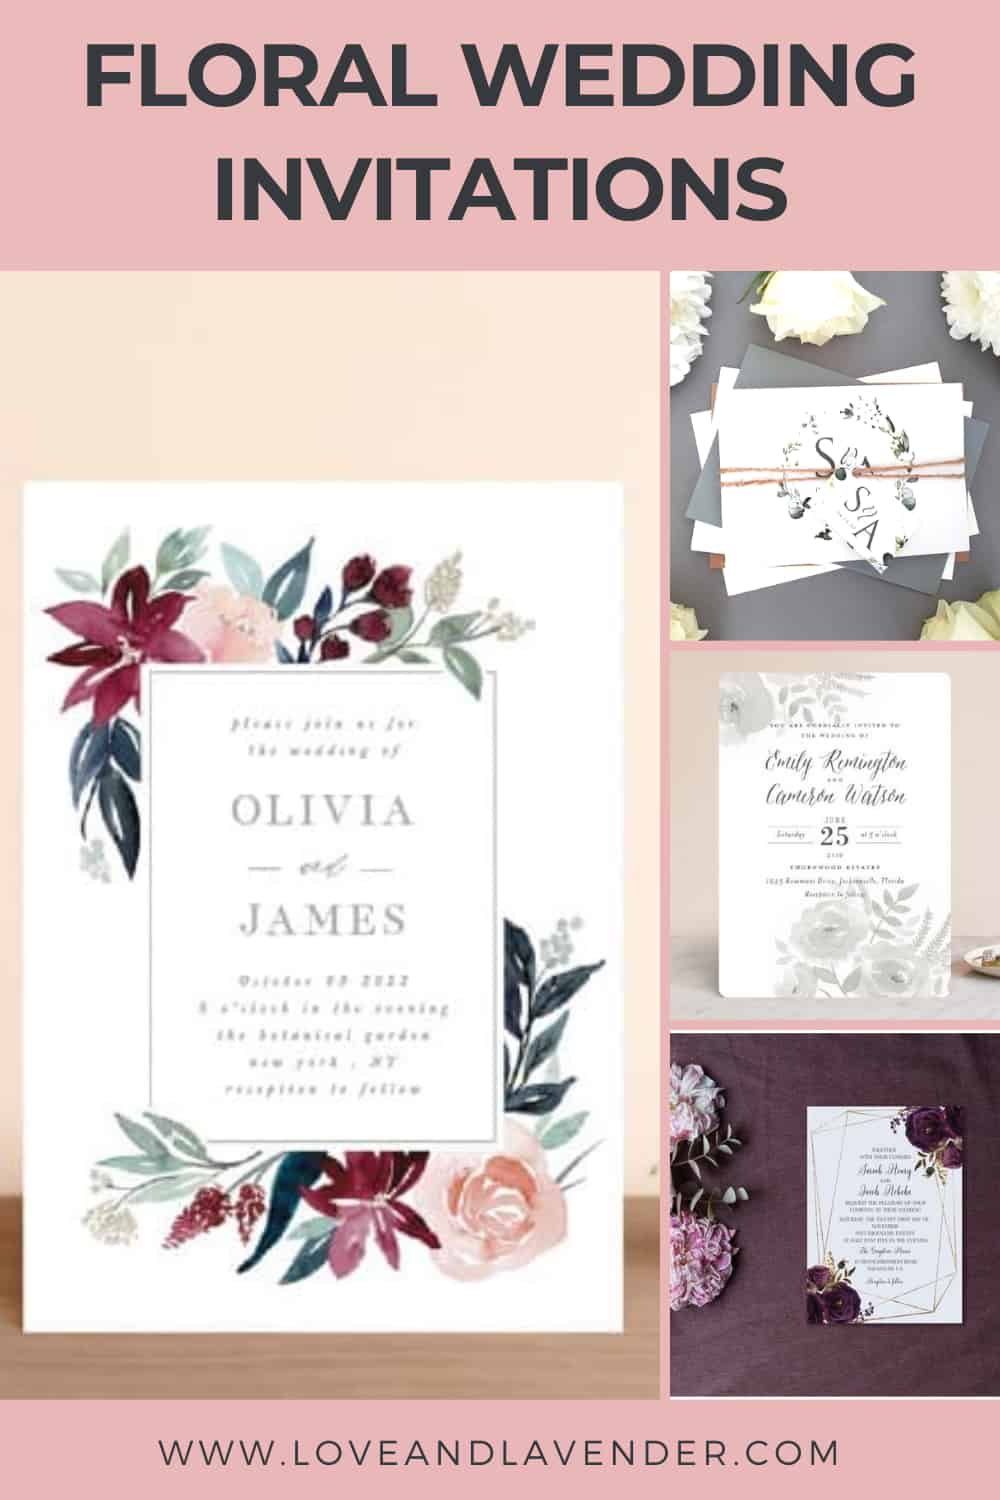 Pinterest Pin - Floral Wedding Invitations